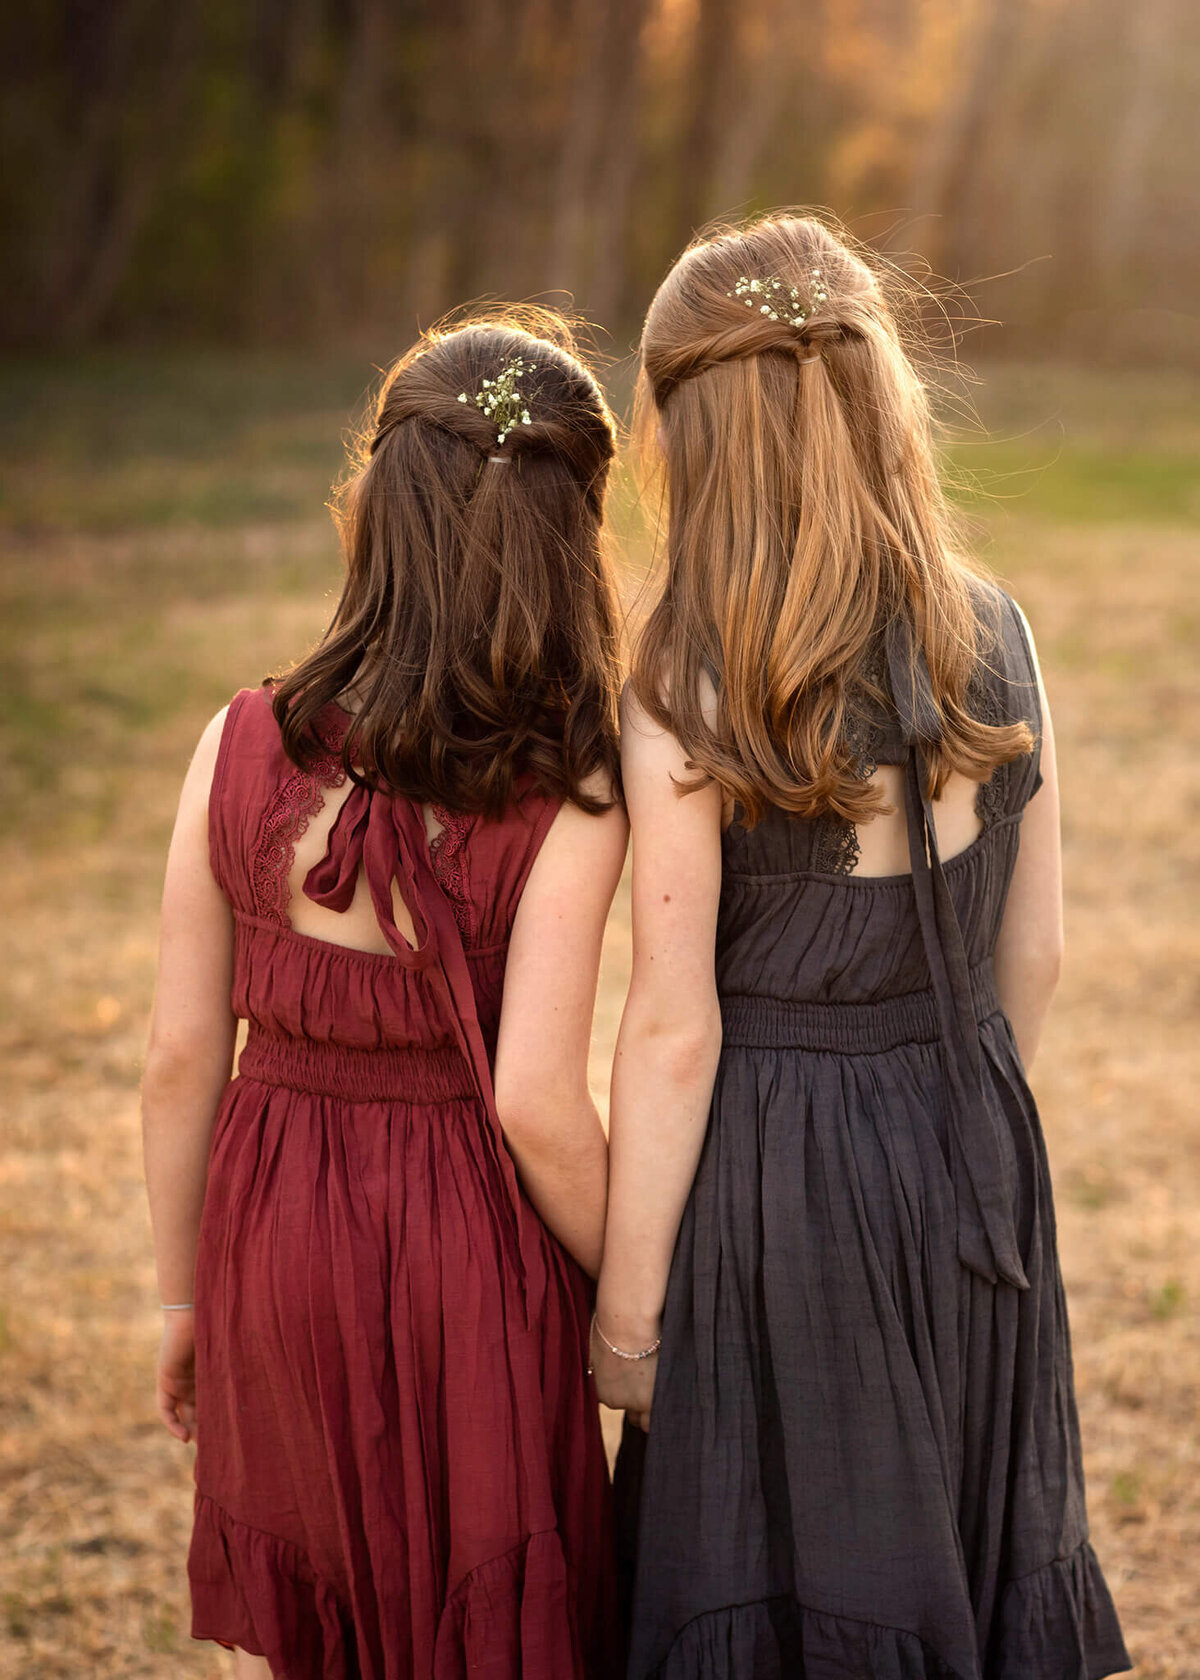 NJ portrait photographer captures daughters with beautiful dresses holding hands